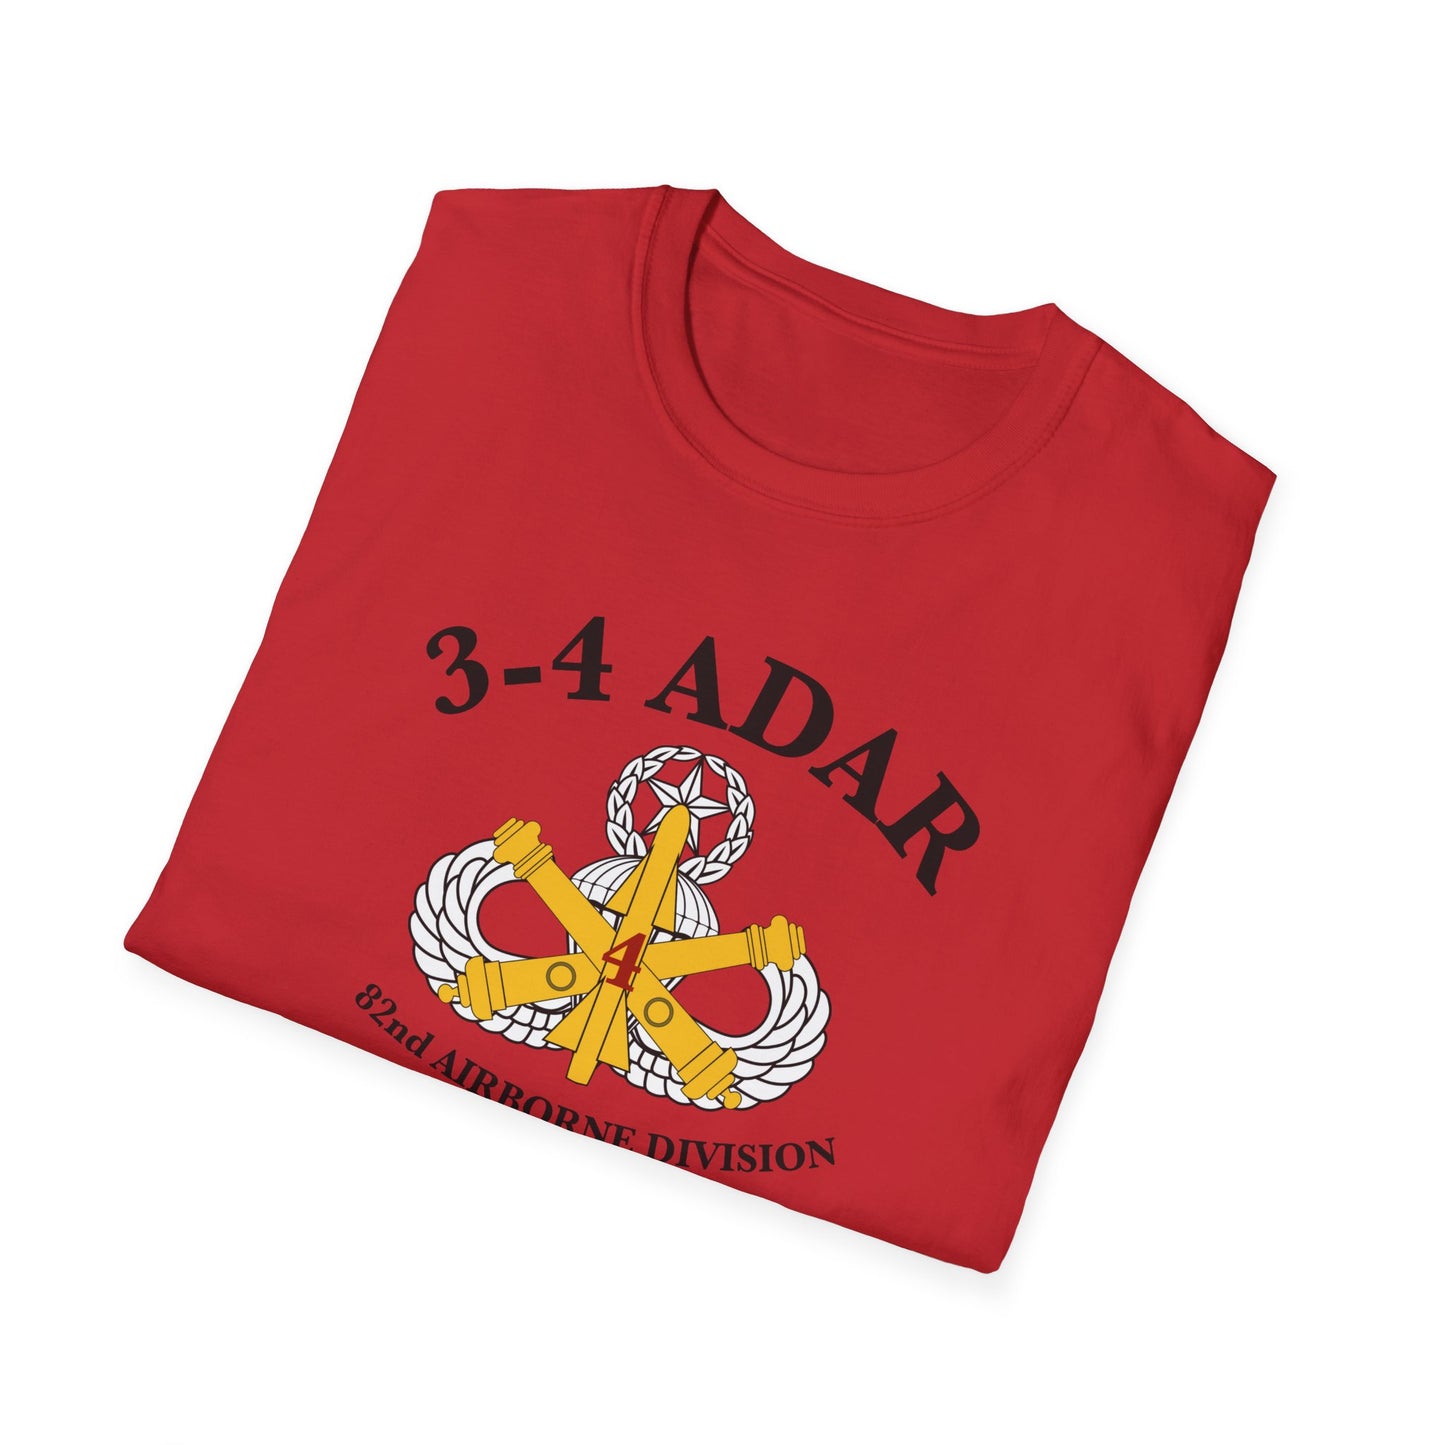 3-4 ADAR Battalion T Shirt Marshall Design Unisex Softstyle T-Shirt